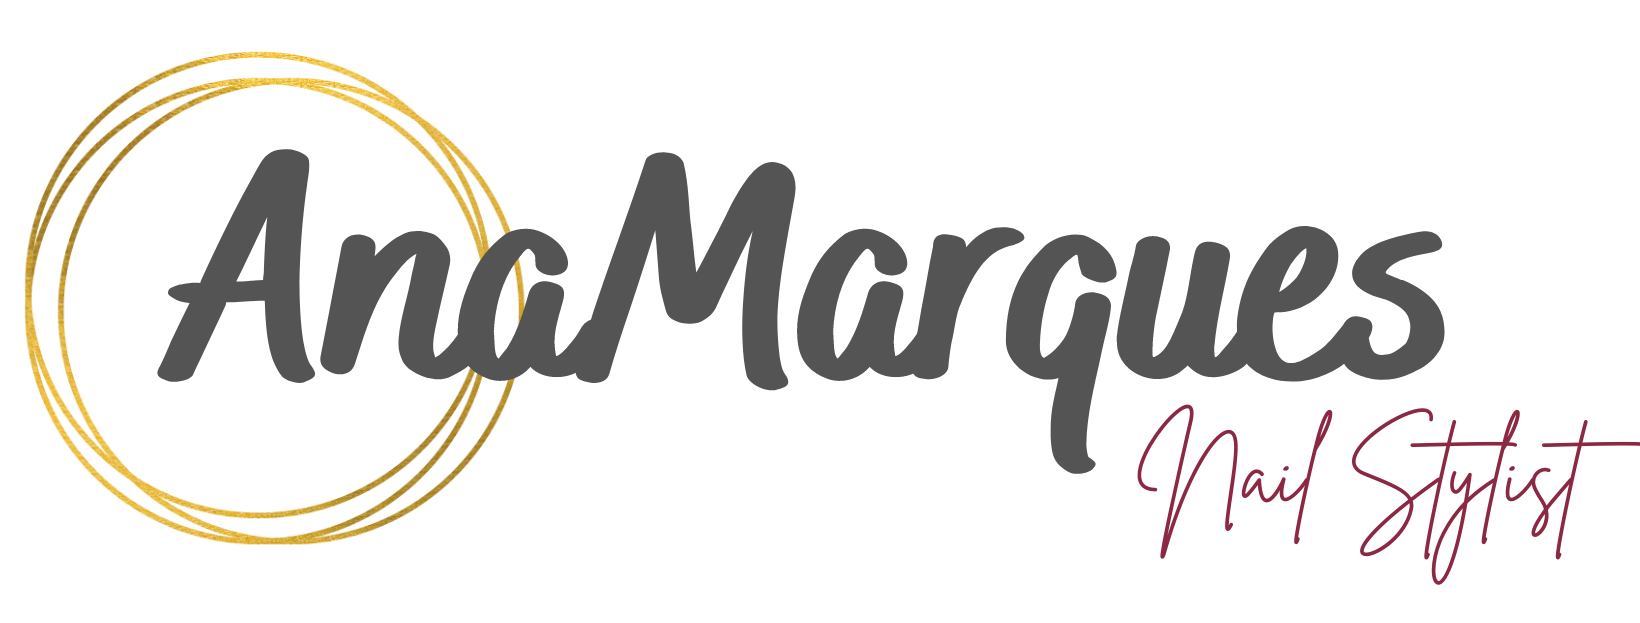 Logotipo Ana Marques NBG